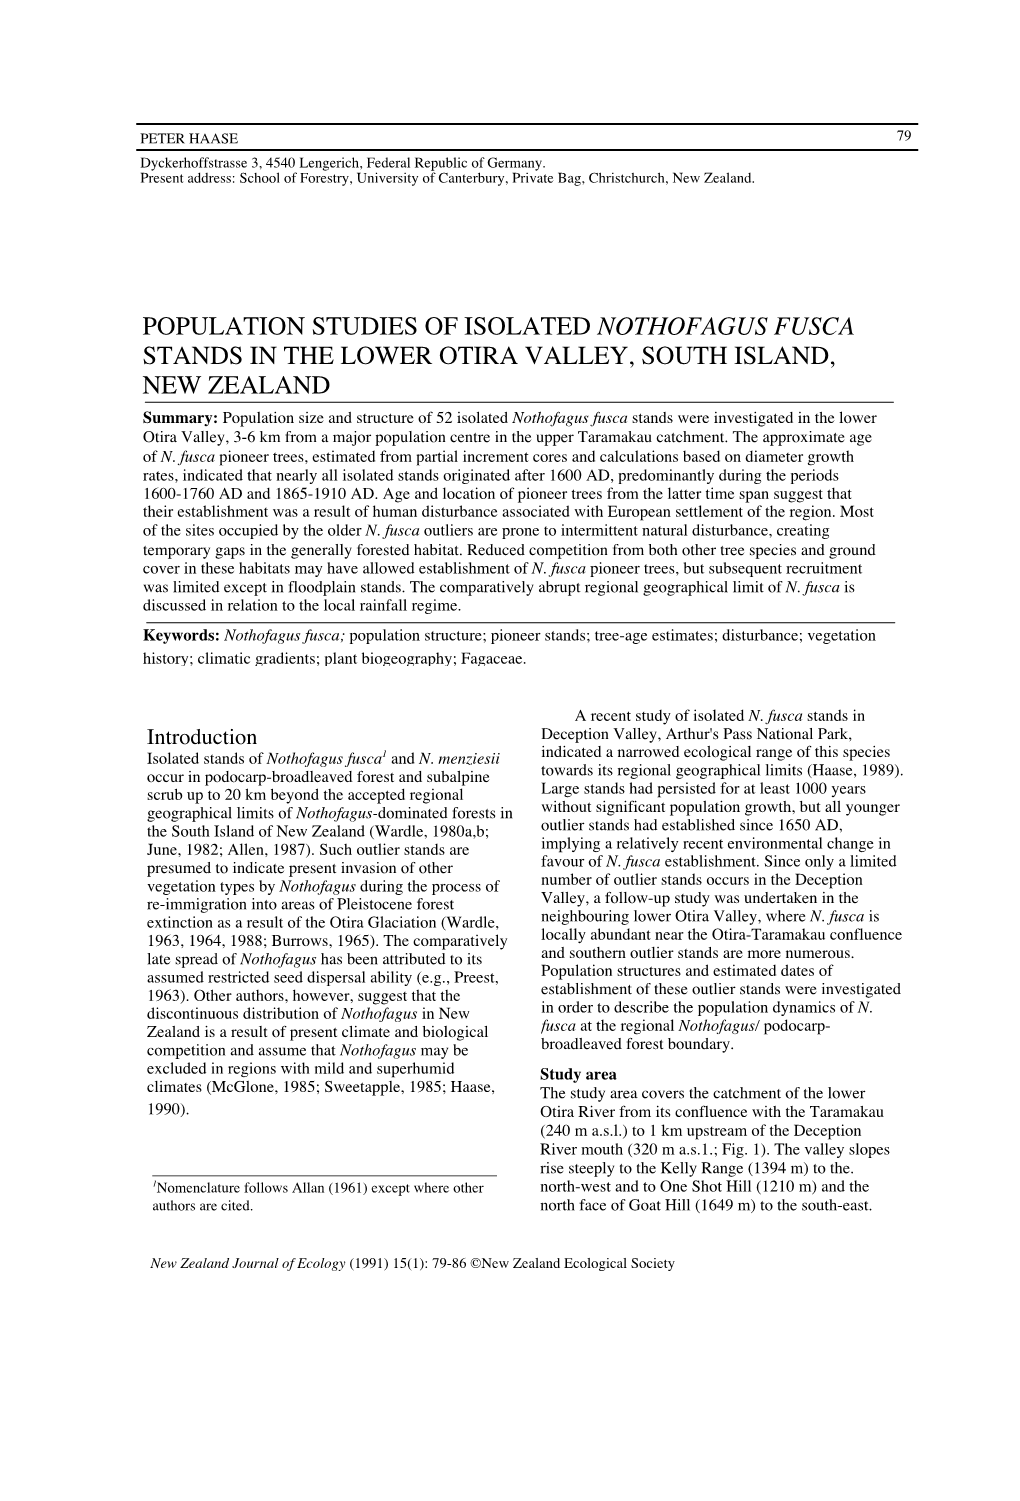 Population Studies of Isolated Nothofagus Fusca